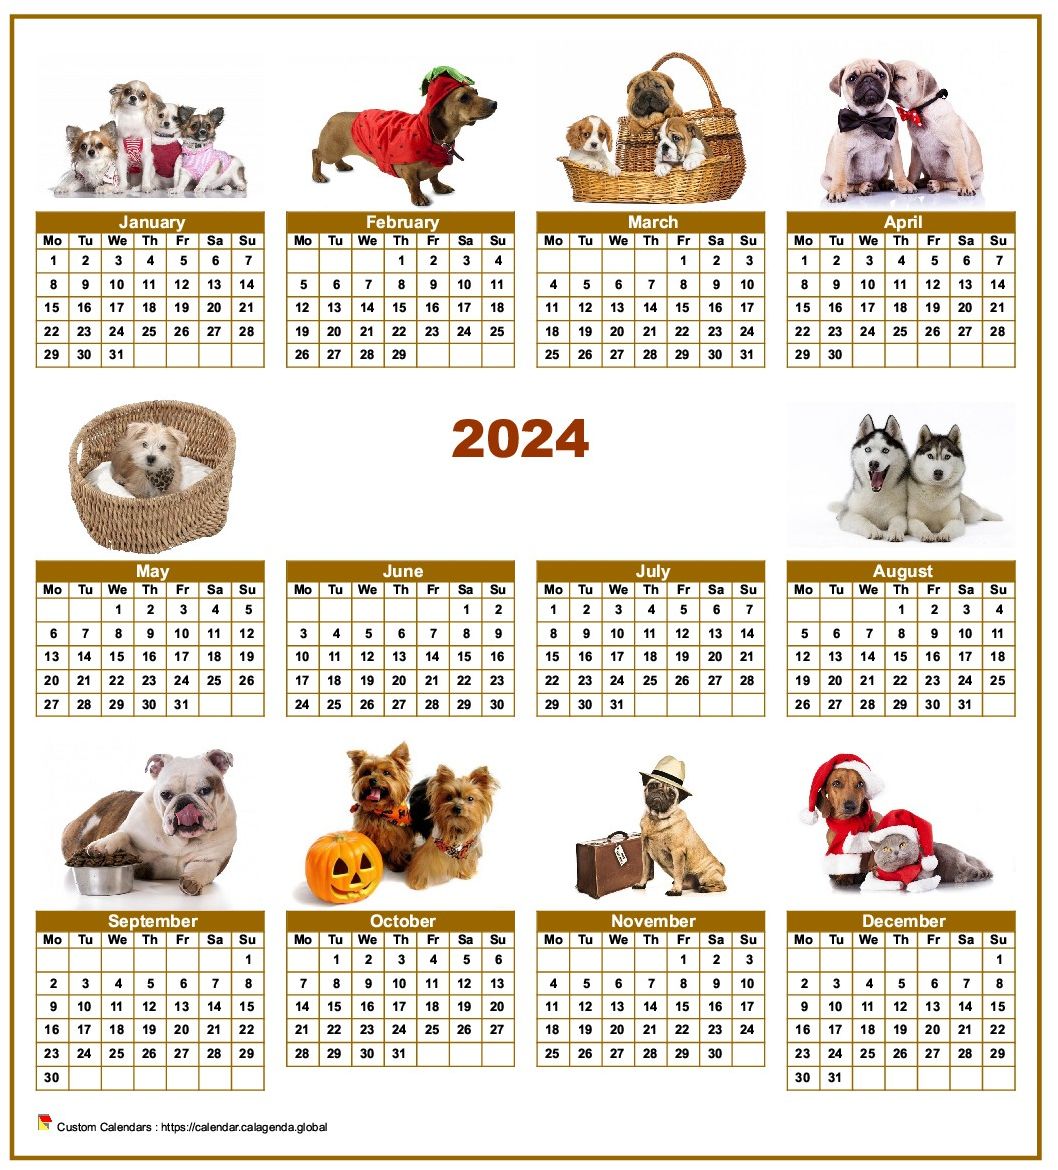 Calendar 2024 annual special 'dogs ' with 10 photos